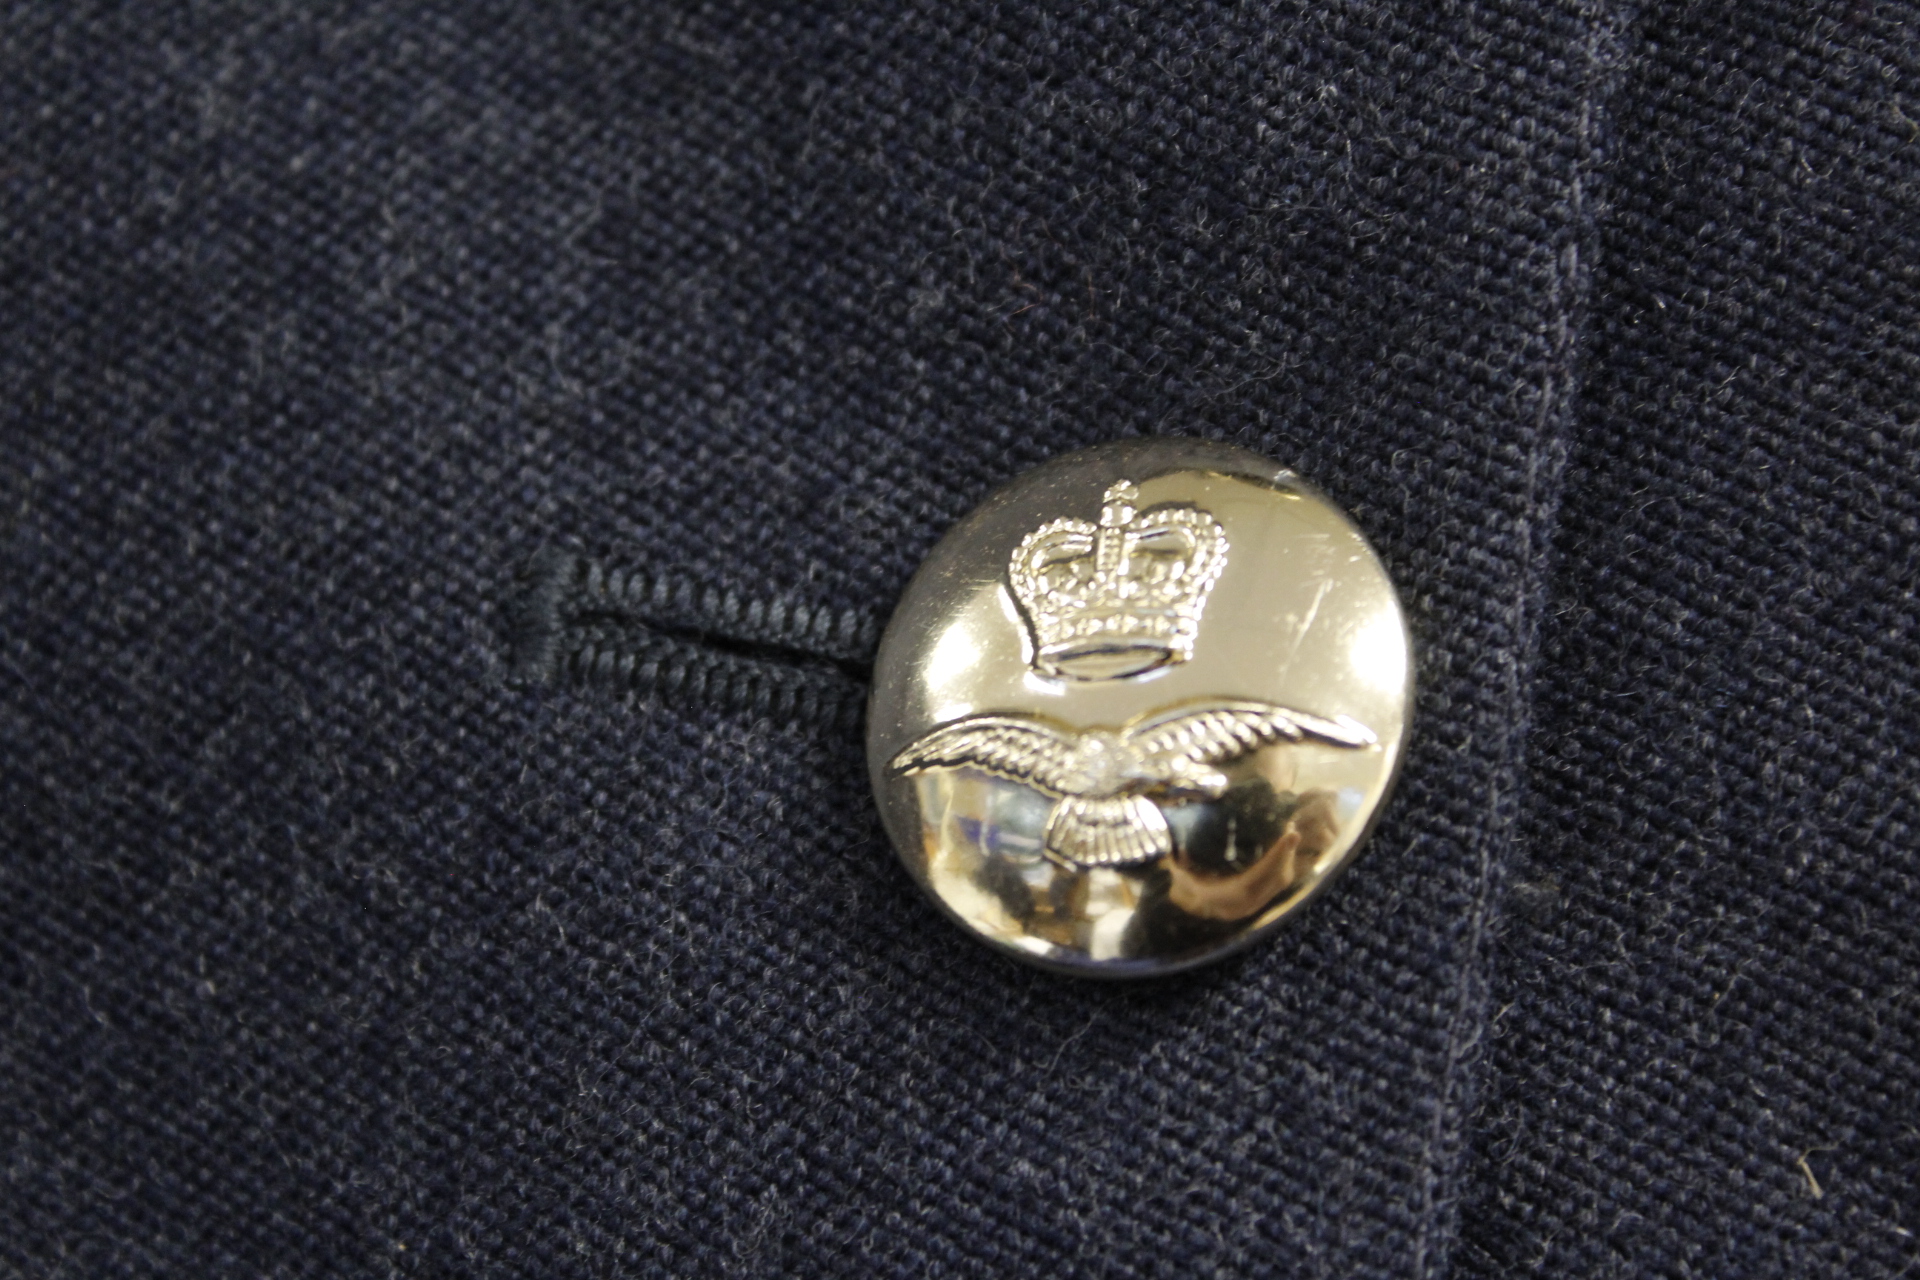 British Royal Air Force dress uniform jacket having interior label "Women's No.1 Dress", Staybrite - Image 3 of 5